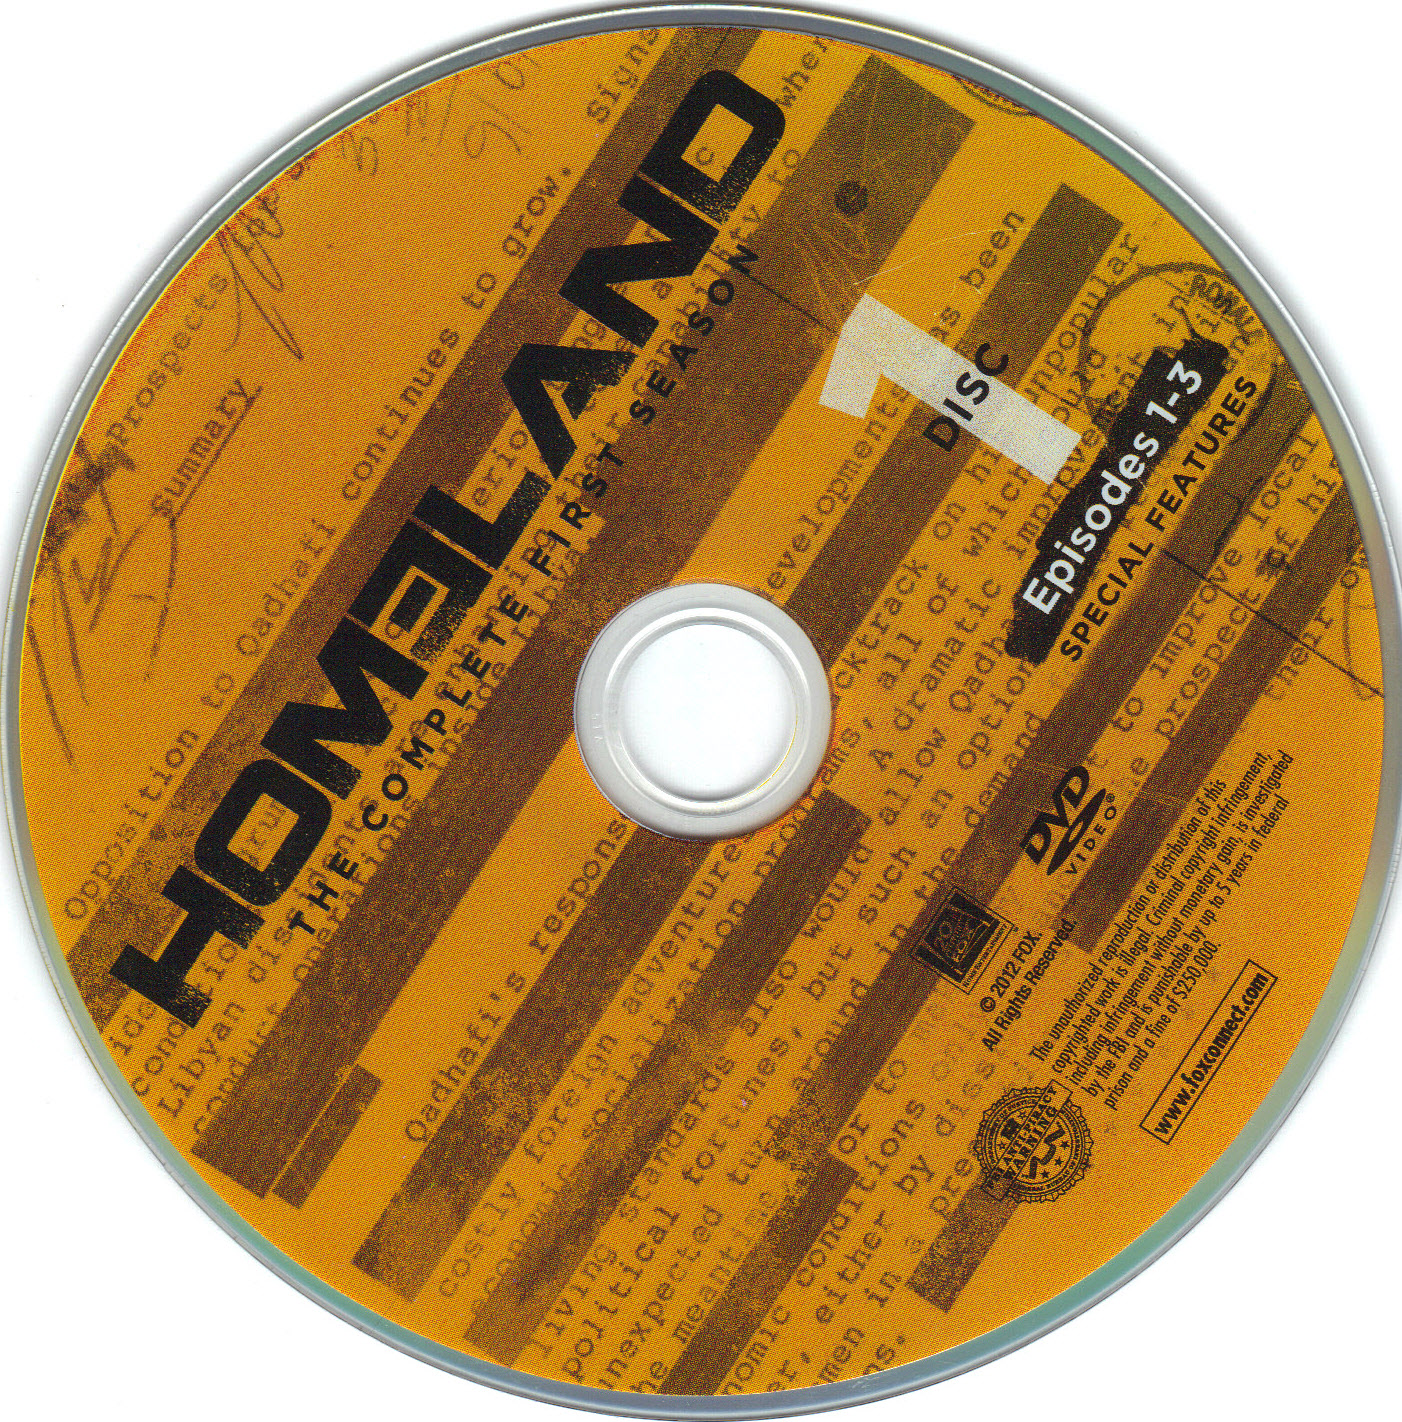 Homeland saison 1 DISC 1